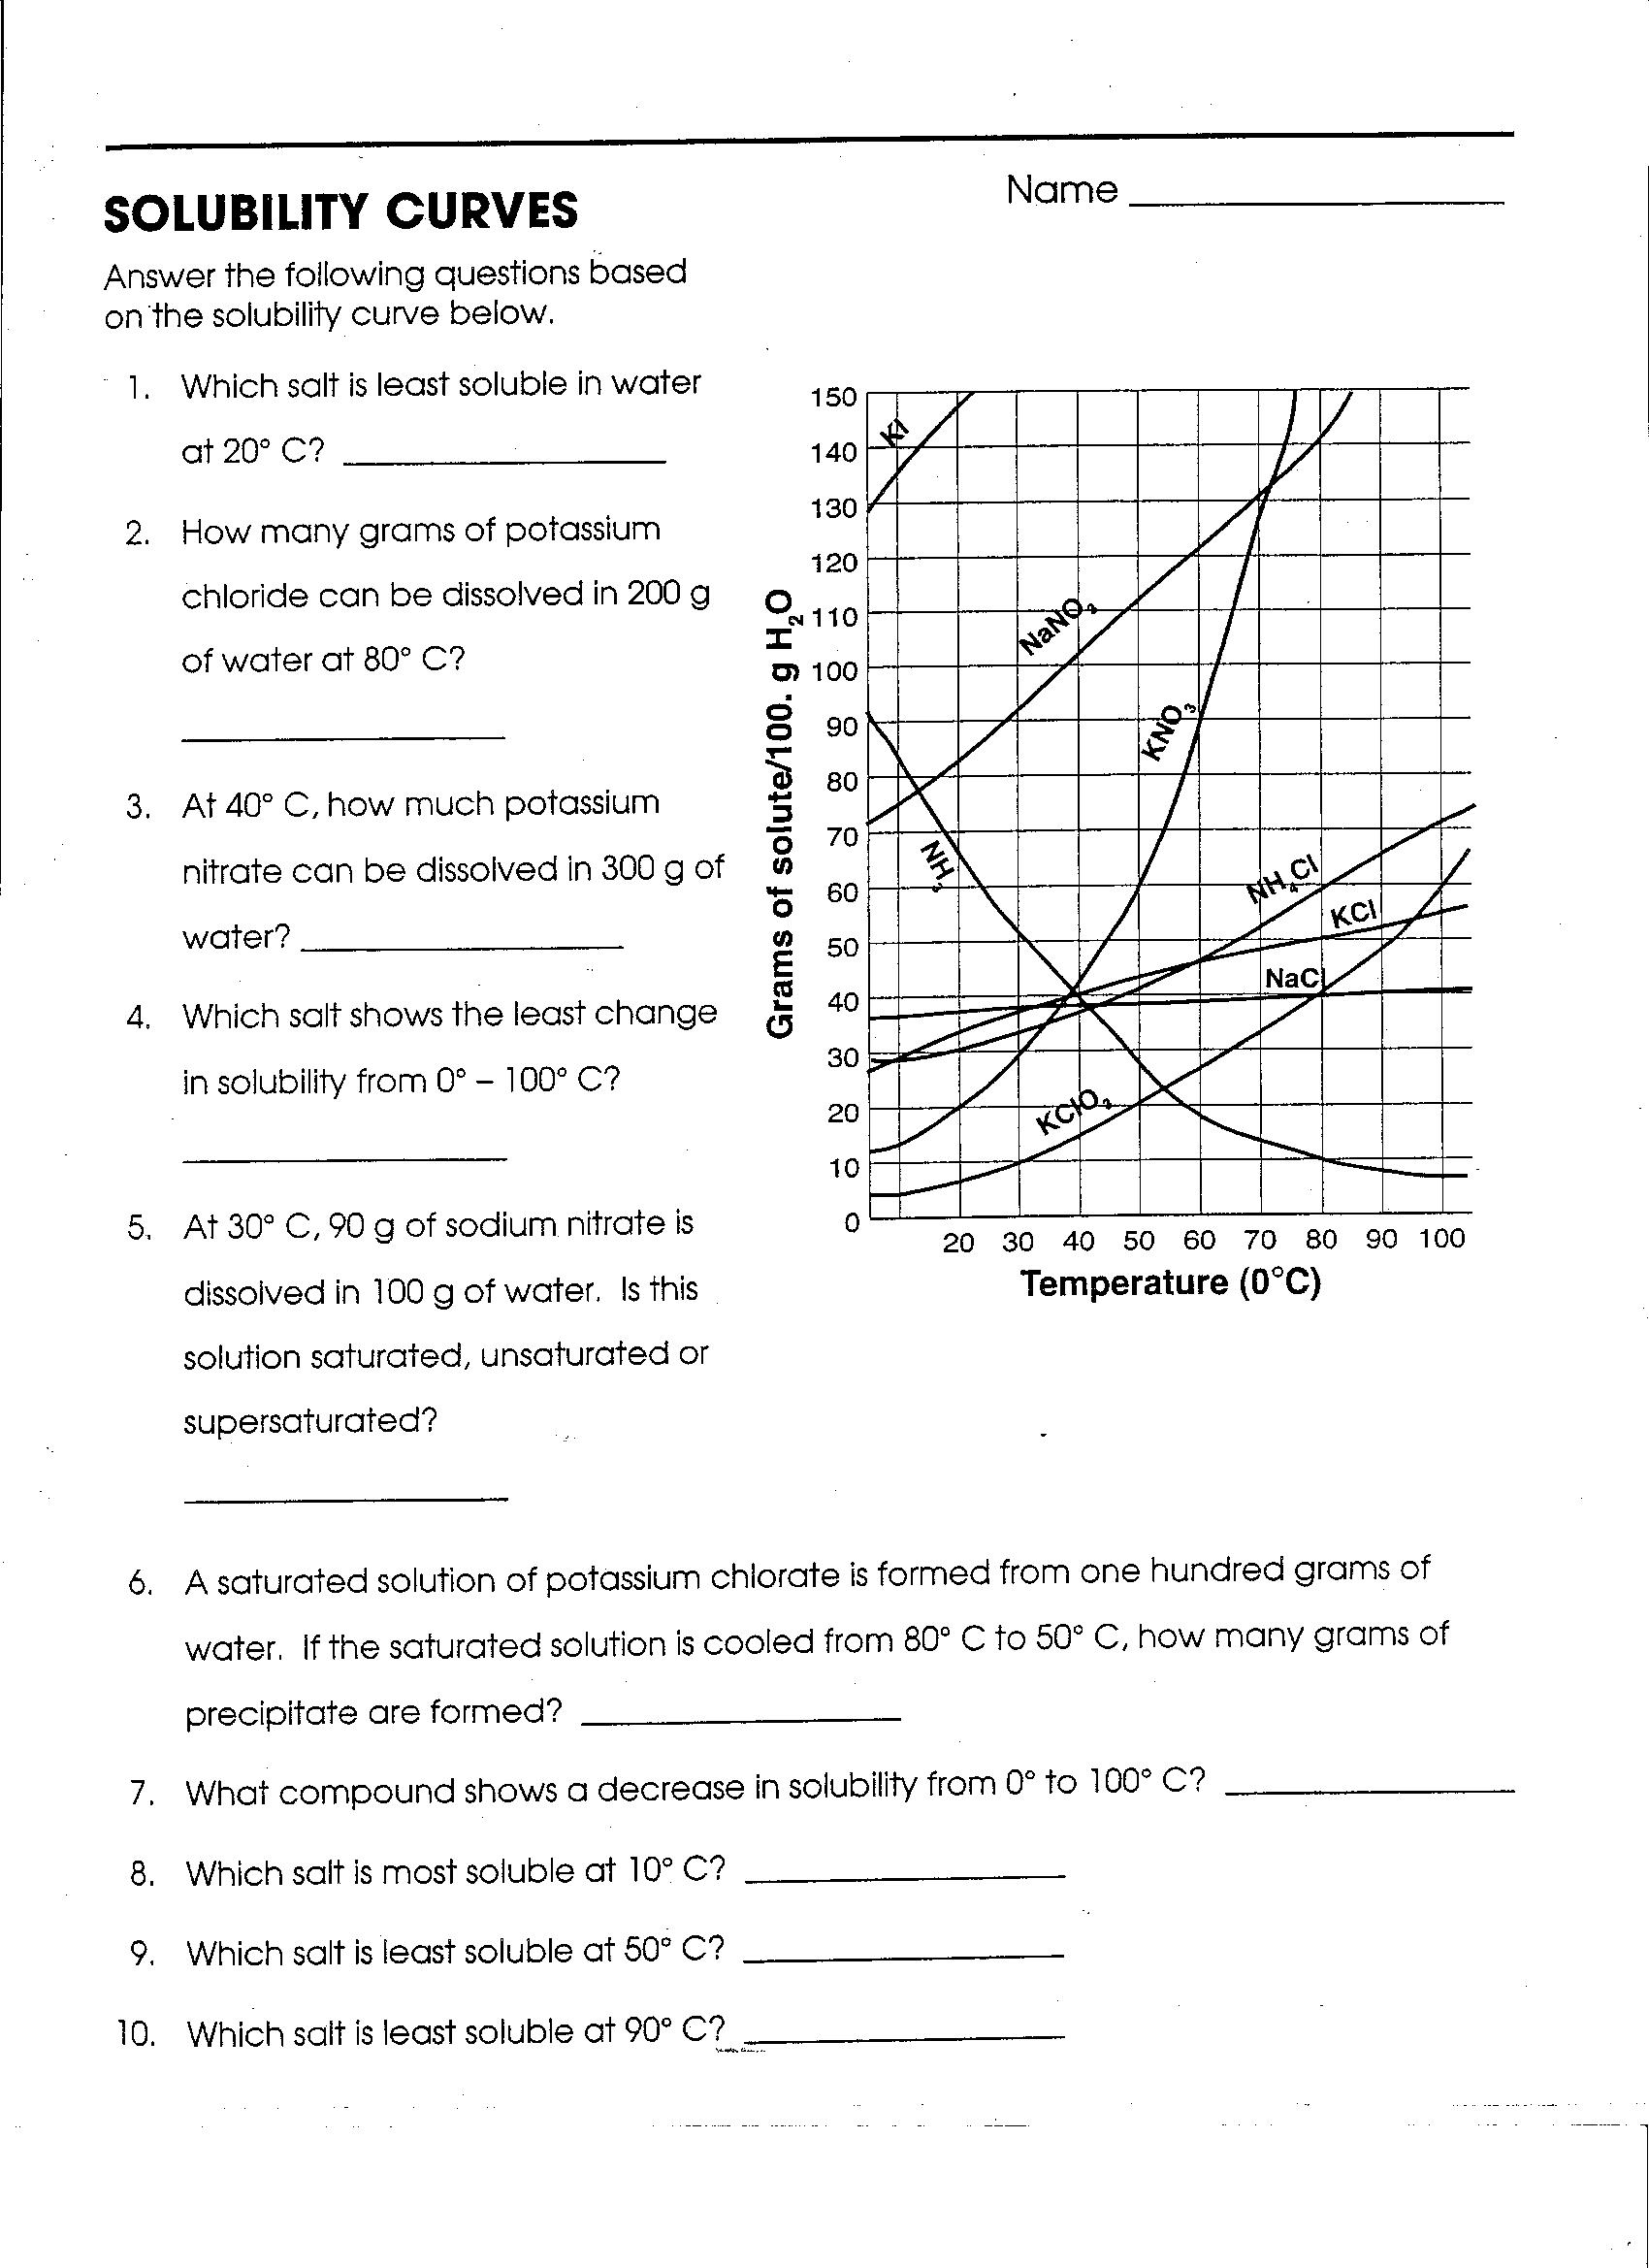 solubility curve answer key